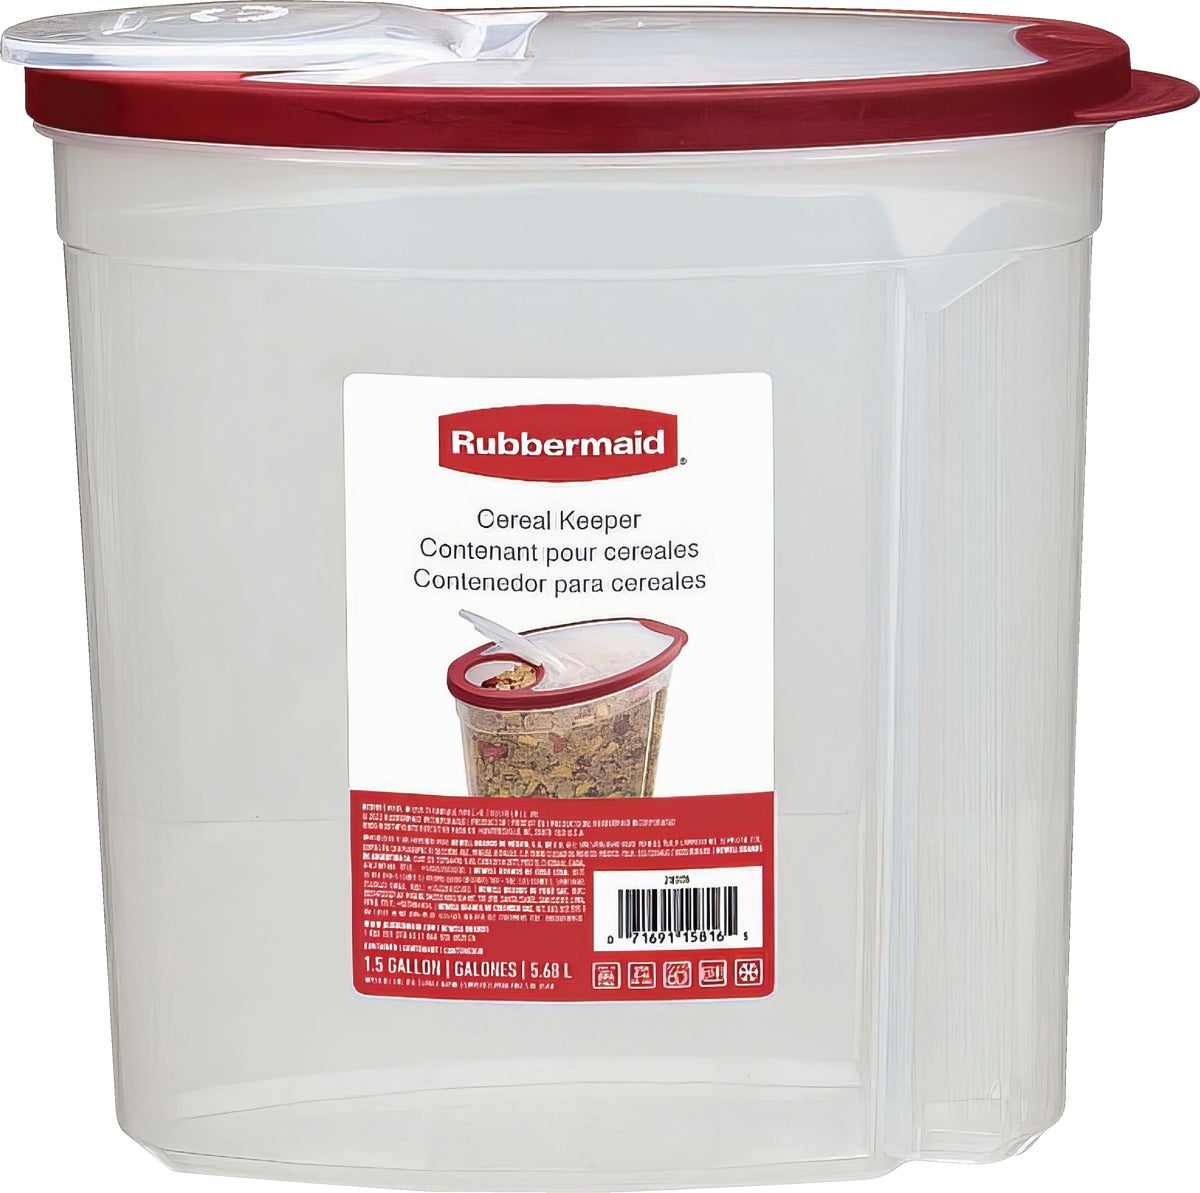 Rubbermaid Servin Saver Flex Seal 1.5 Gallon Cereal Storage Food Container